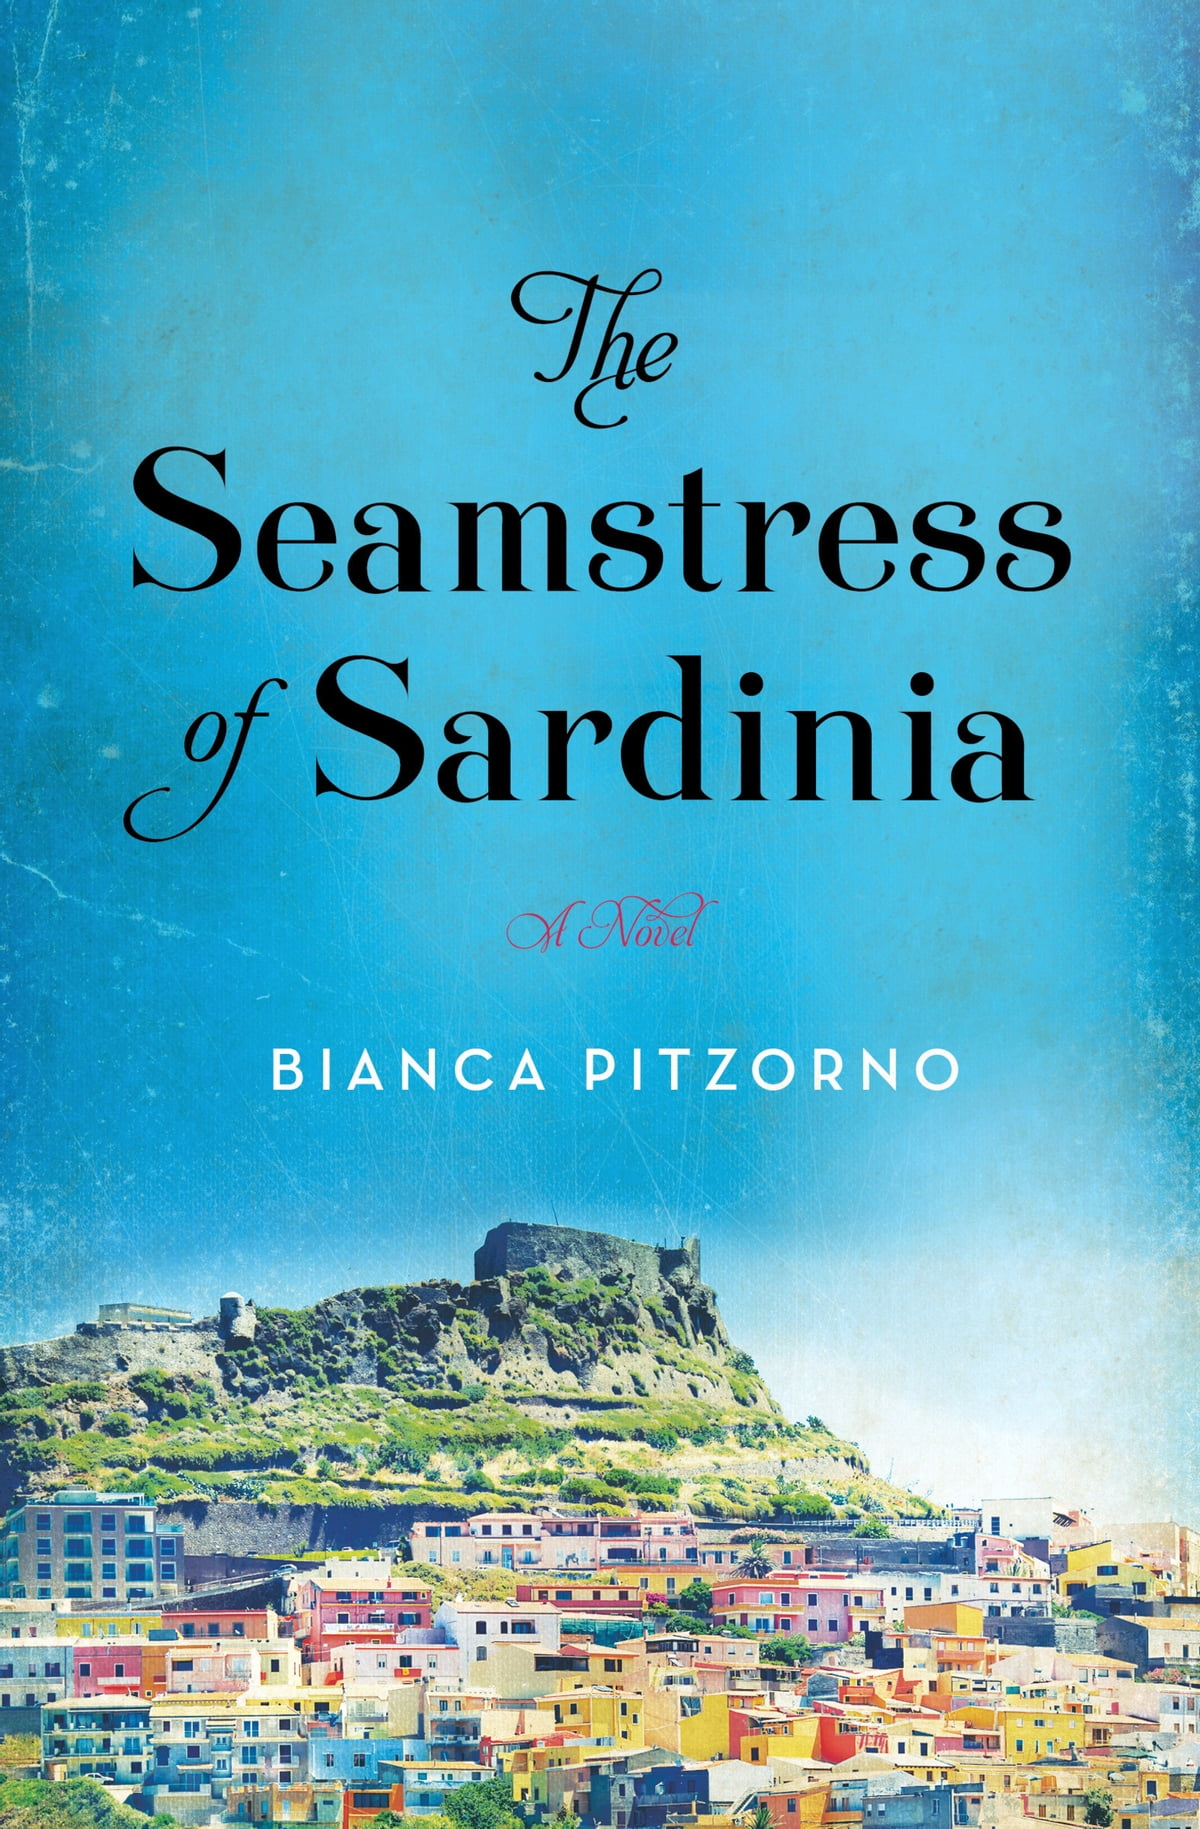 The Seamstress of Sardinia by Bianca Pitzorno